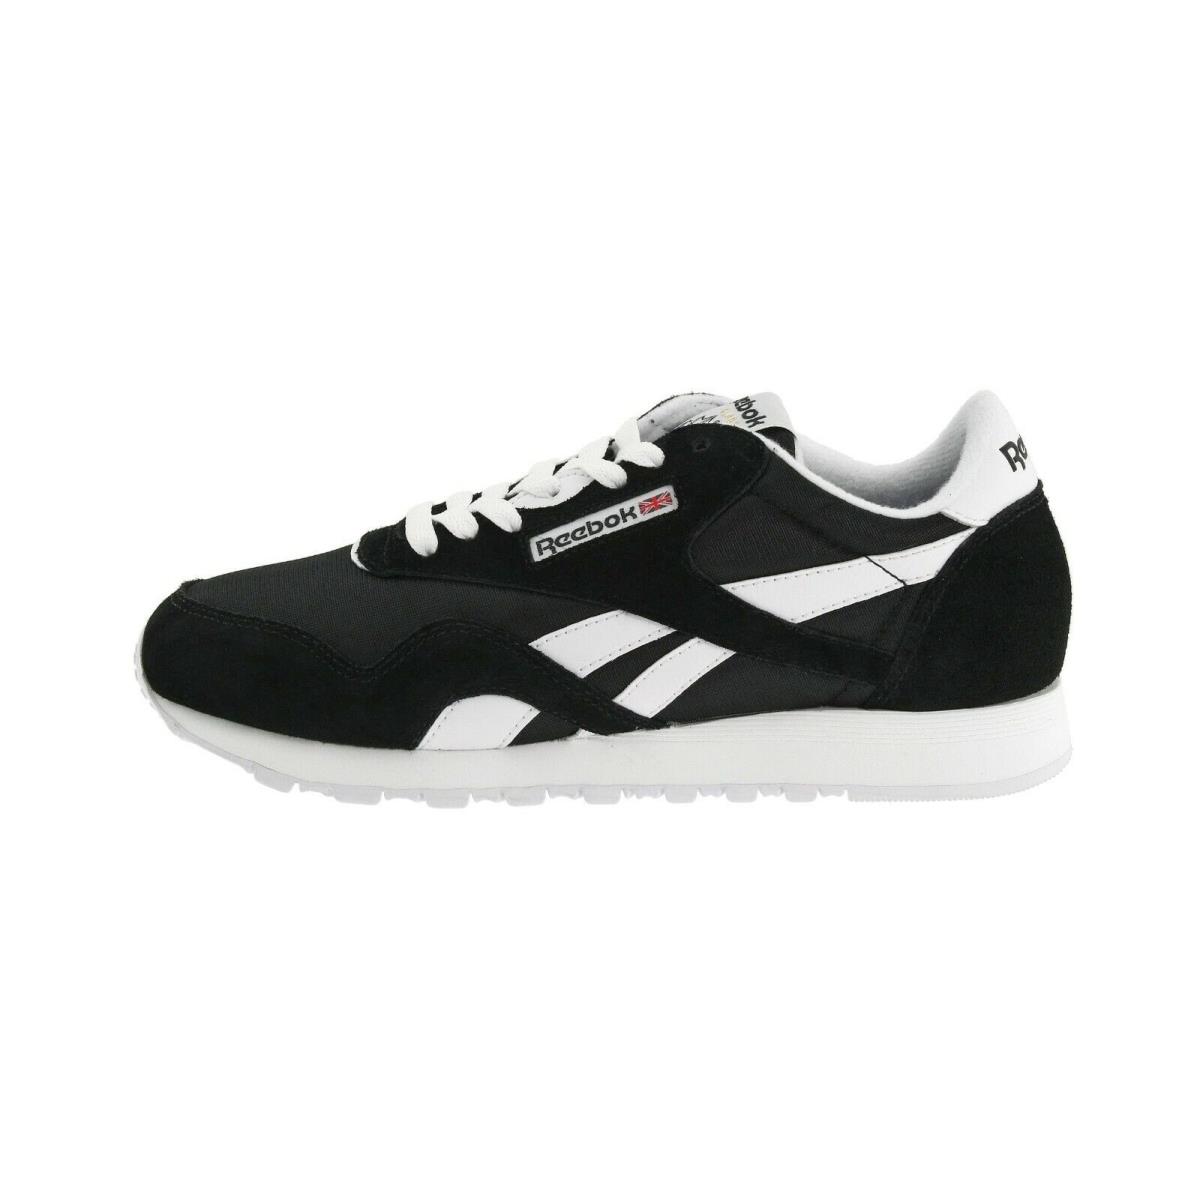 Reebok Classic Nylon Knit Black White Running Shoes Women Sneakers - Black